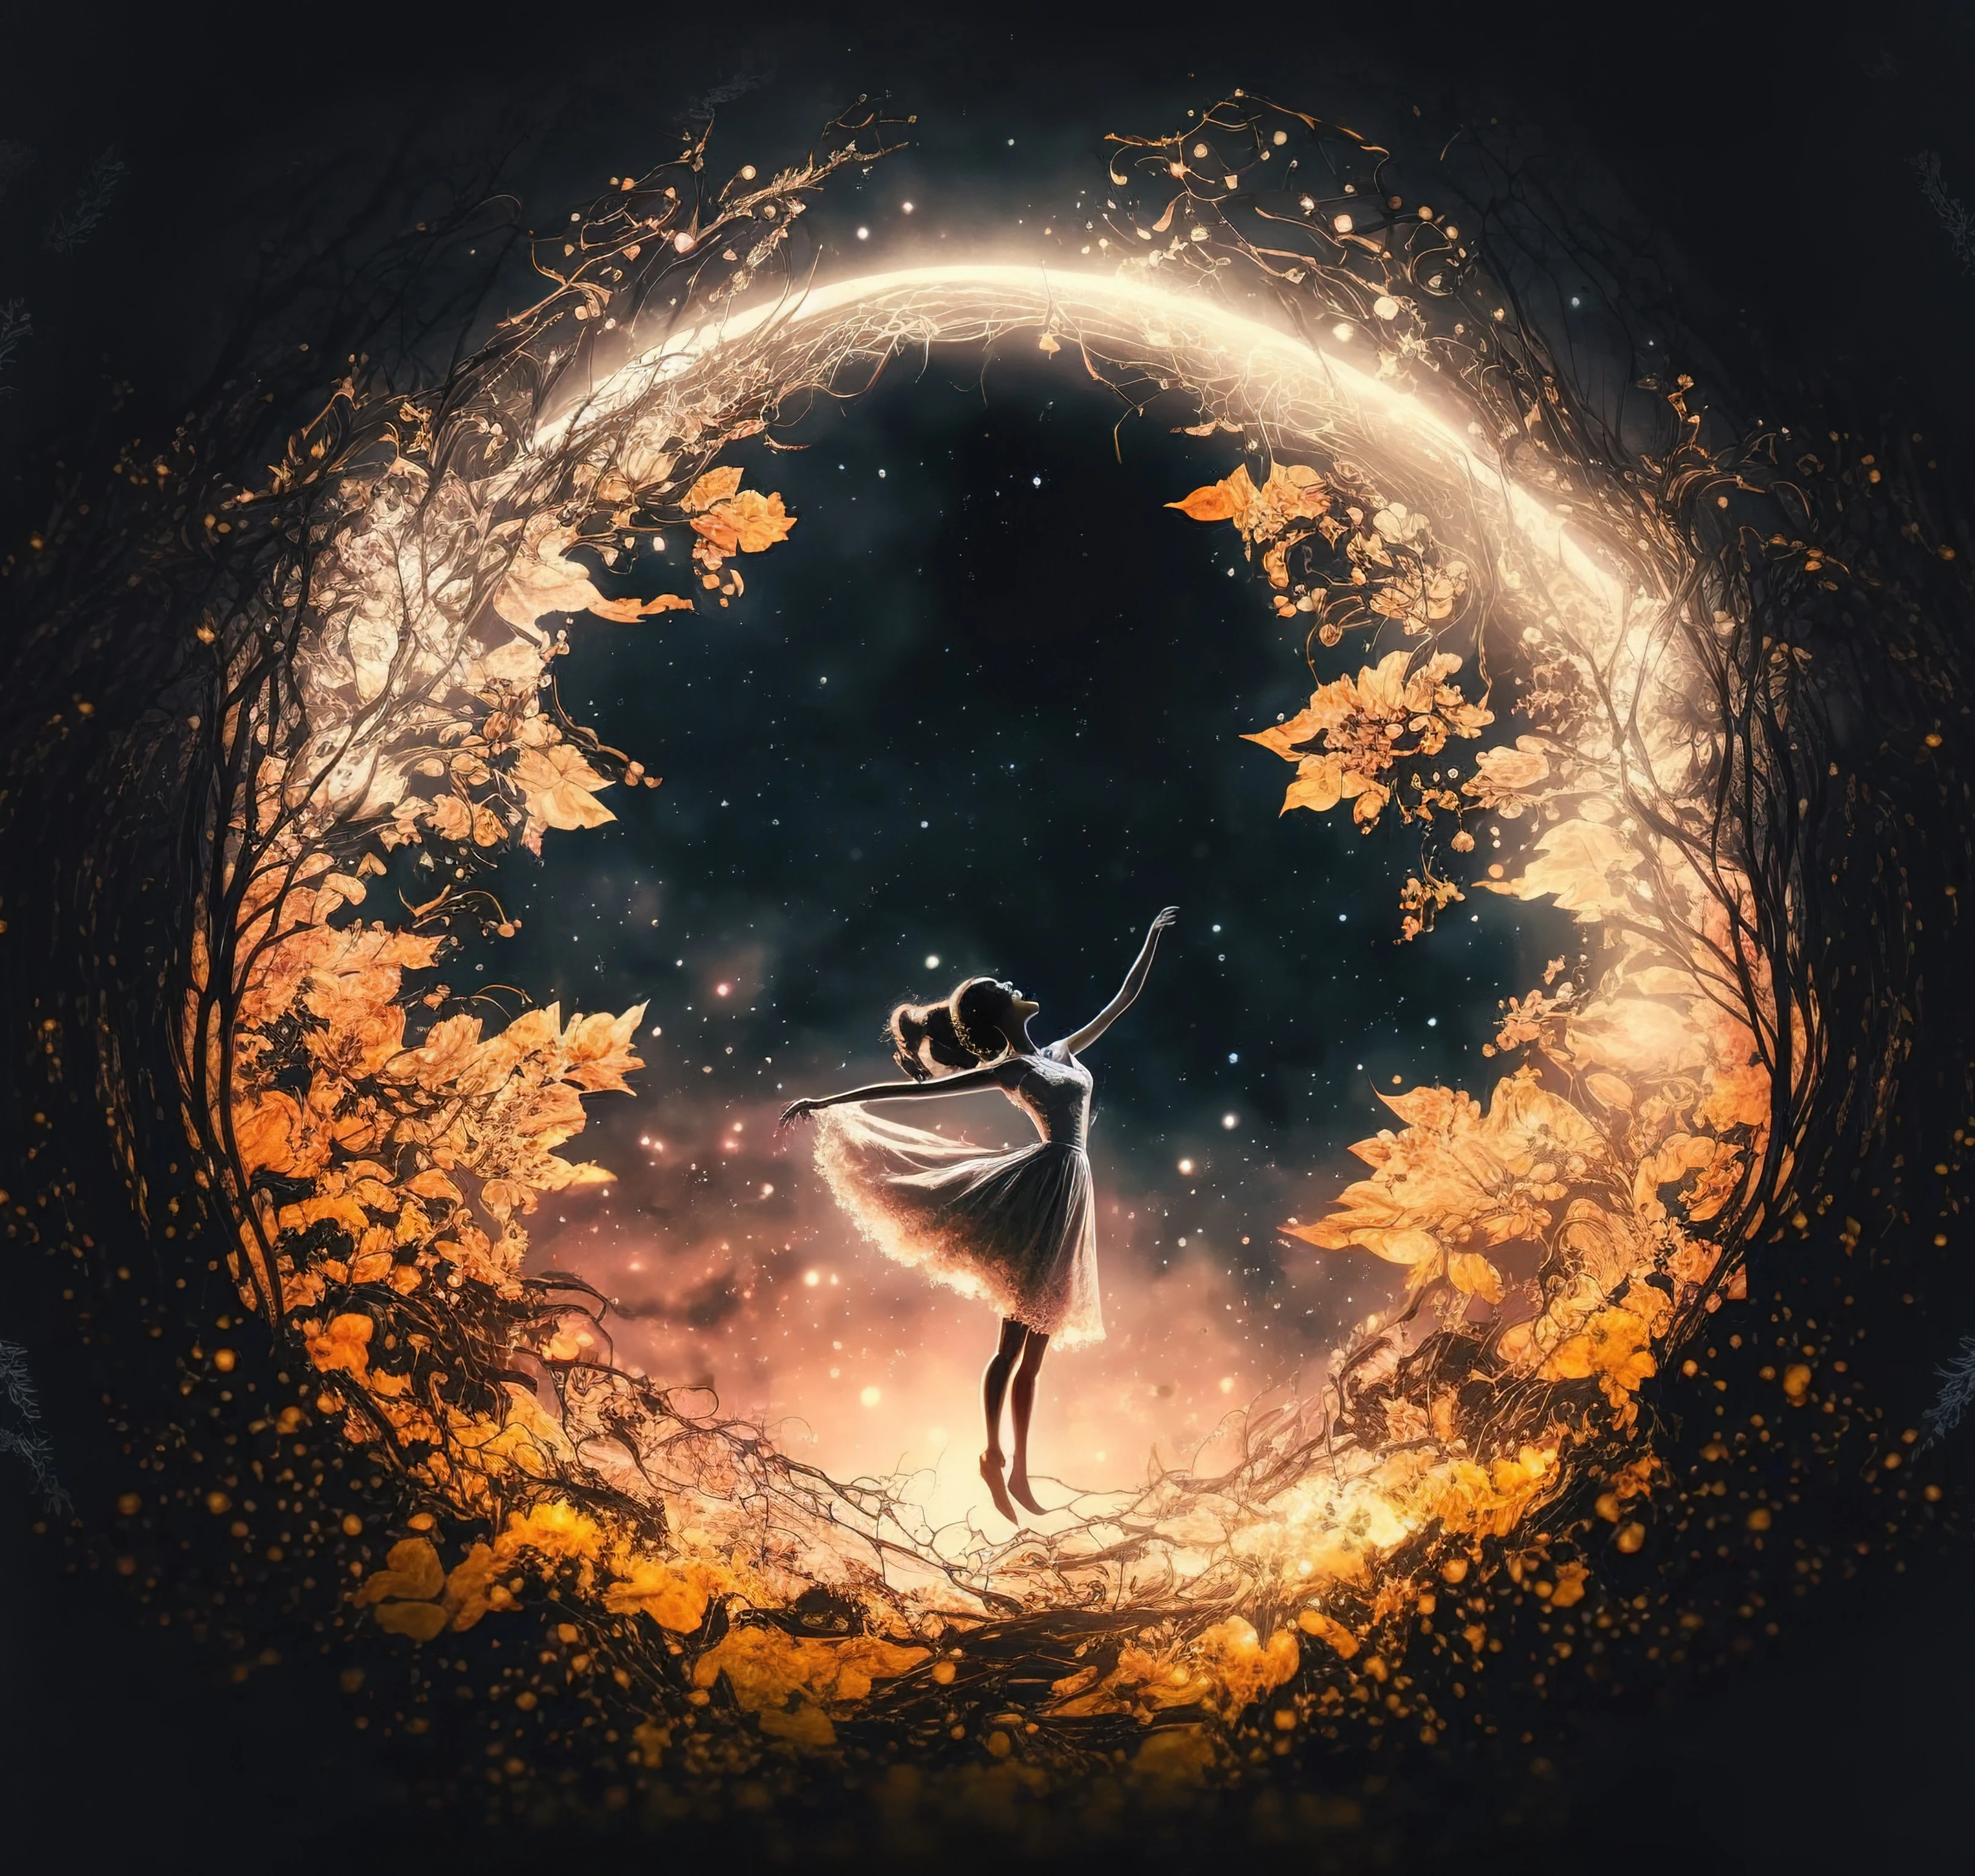 823-676032343072718-ballerina-dancing-with-fireflies-against-crescent-moon-digital-art-style-illustr-17033327787211.jpg